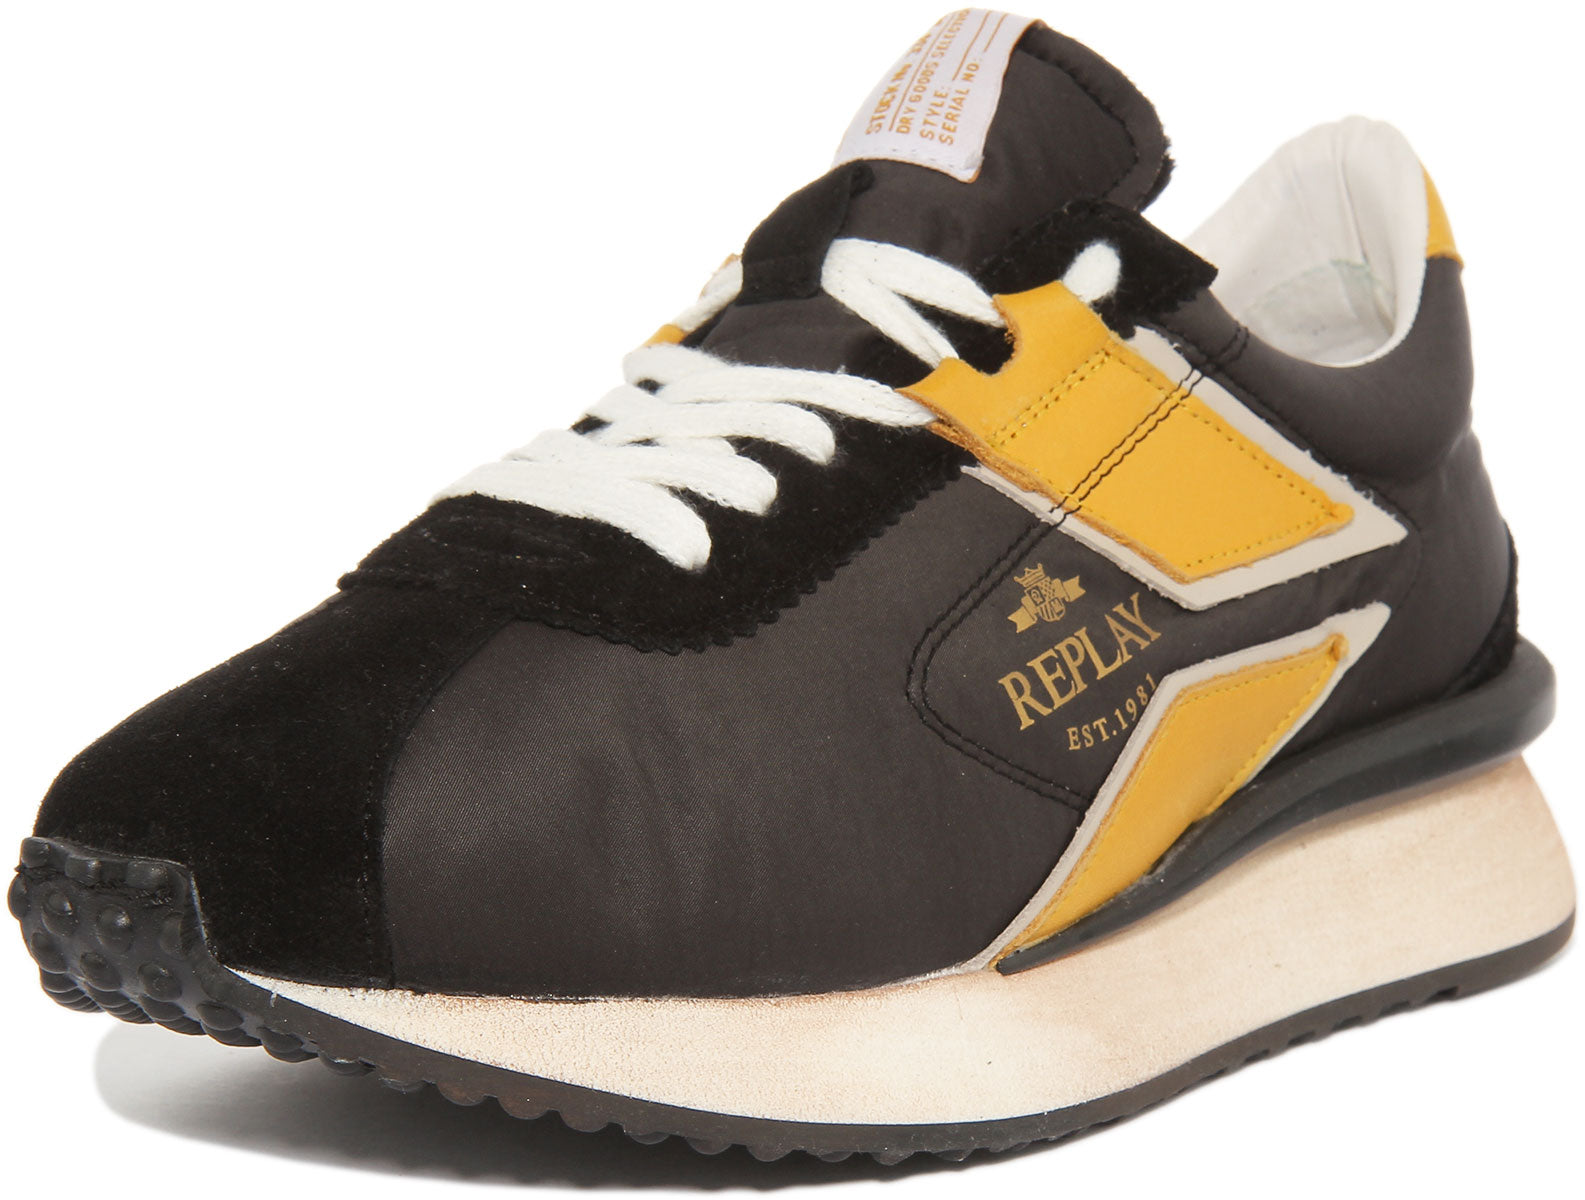  Replay Men's Sneaker, 1398 Off Wht Black Yellow, 9